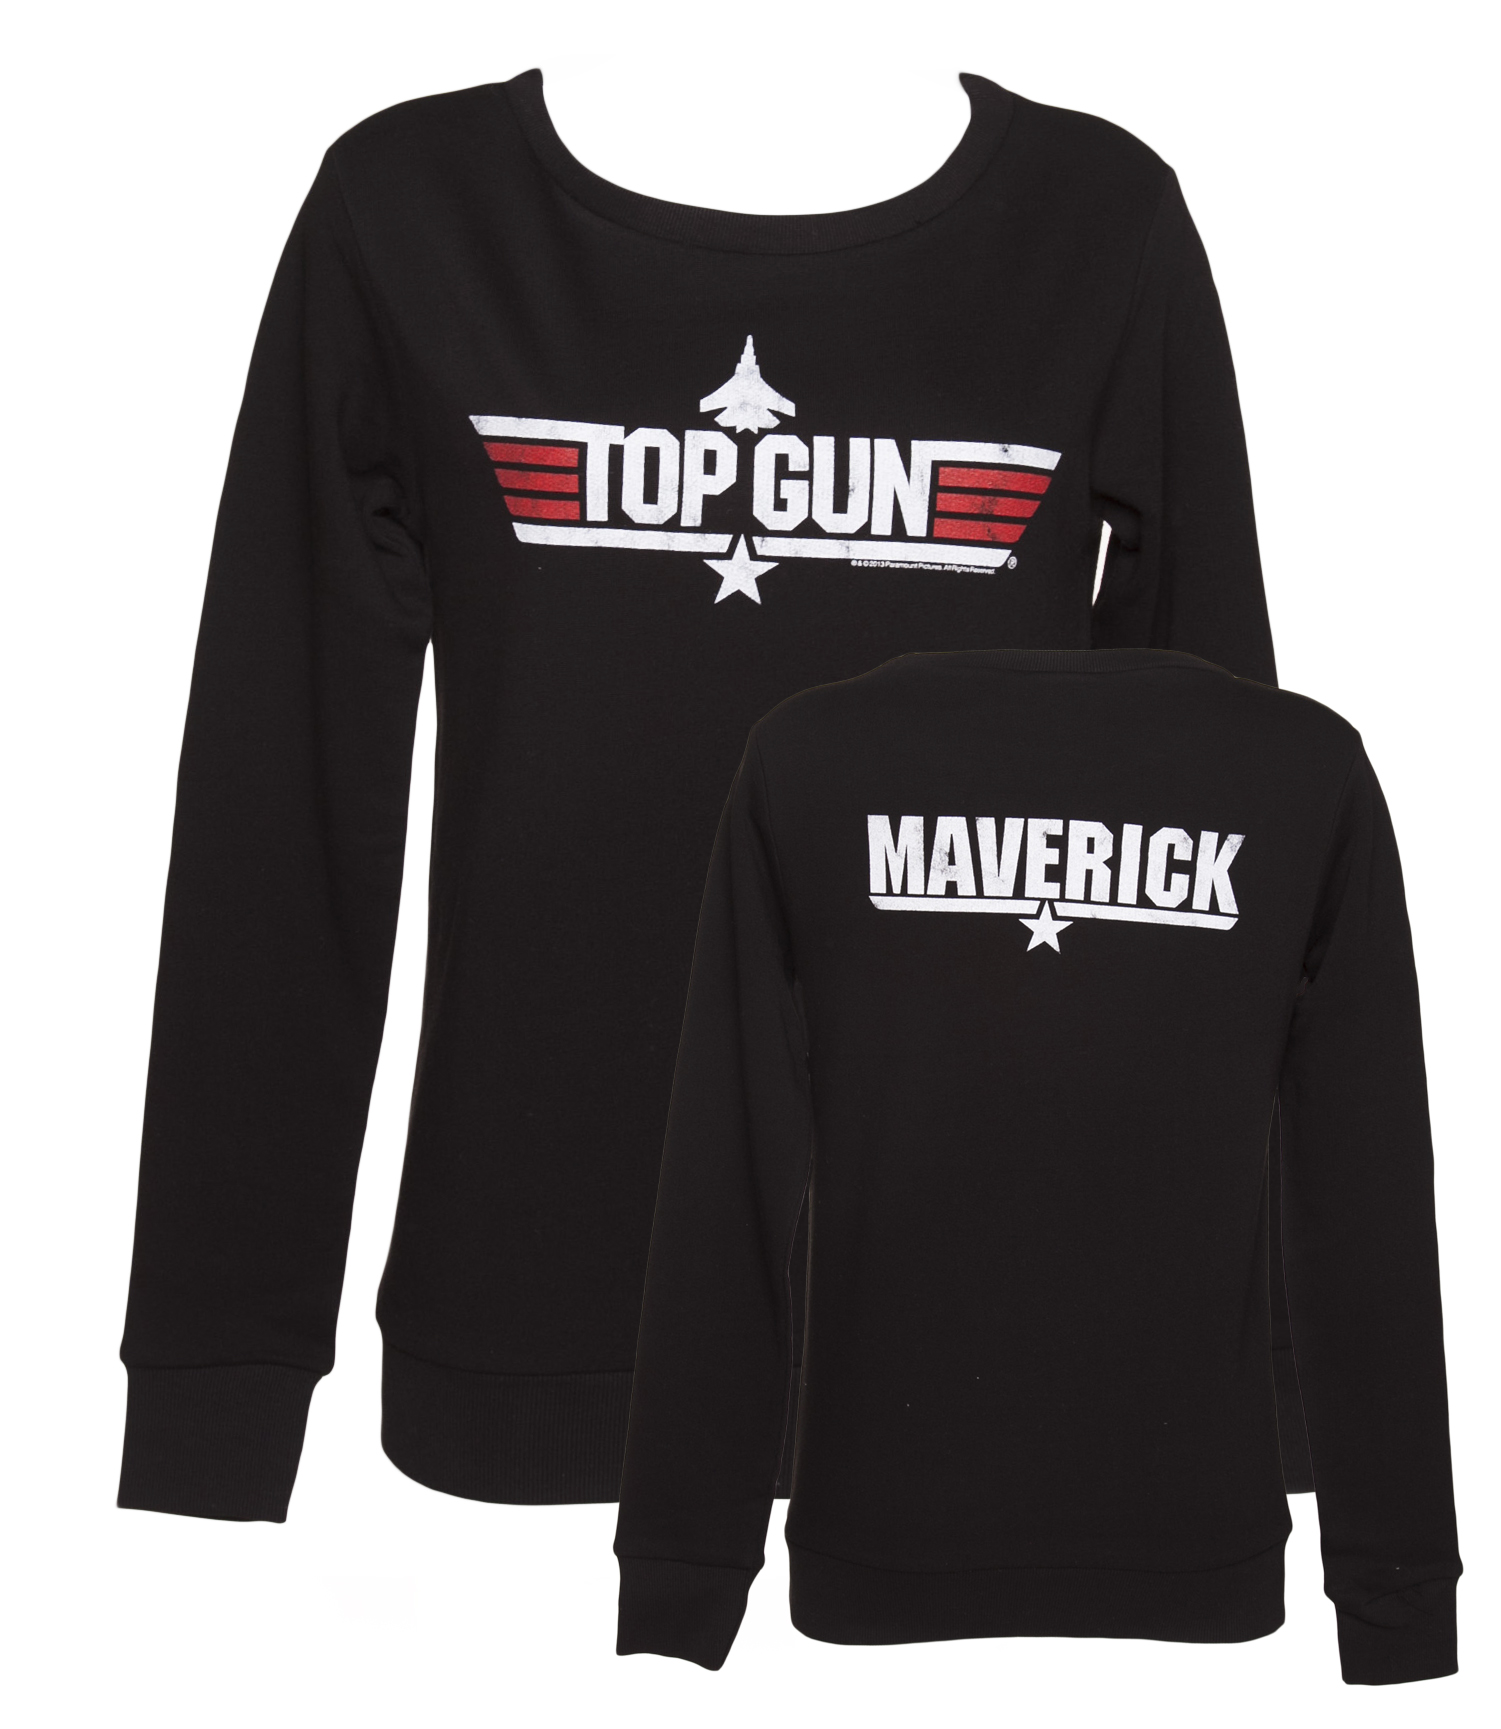 Ladies Black Top Gun Maverick Sweater